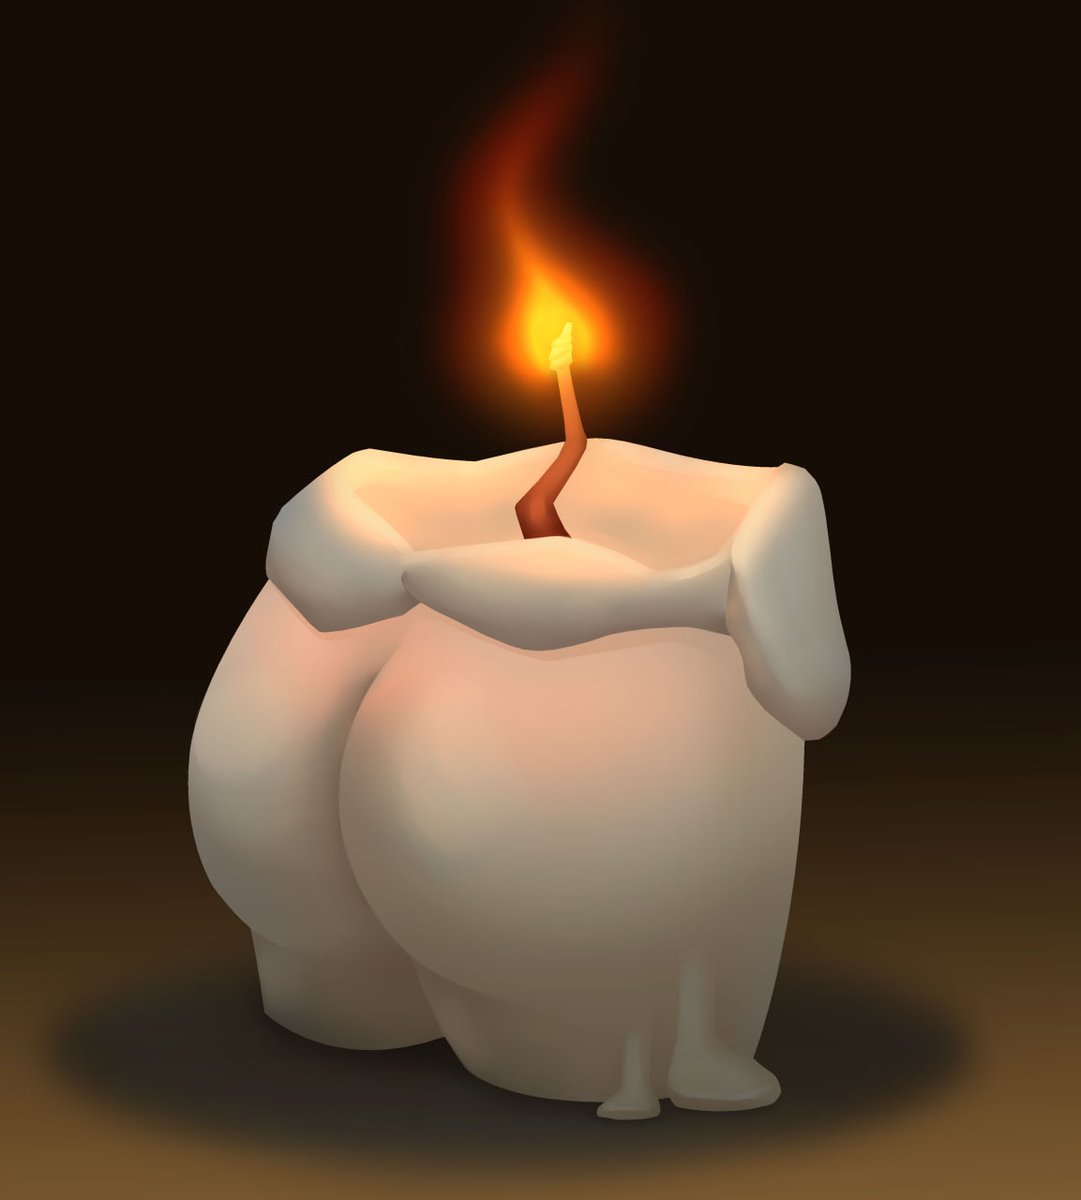 Burning butt

#ArtistOnTwitter #candles #studydrawing #materialstudy